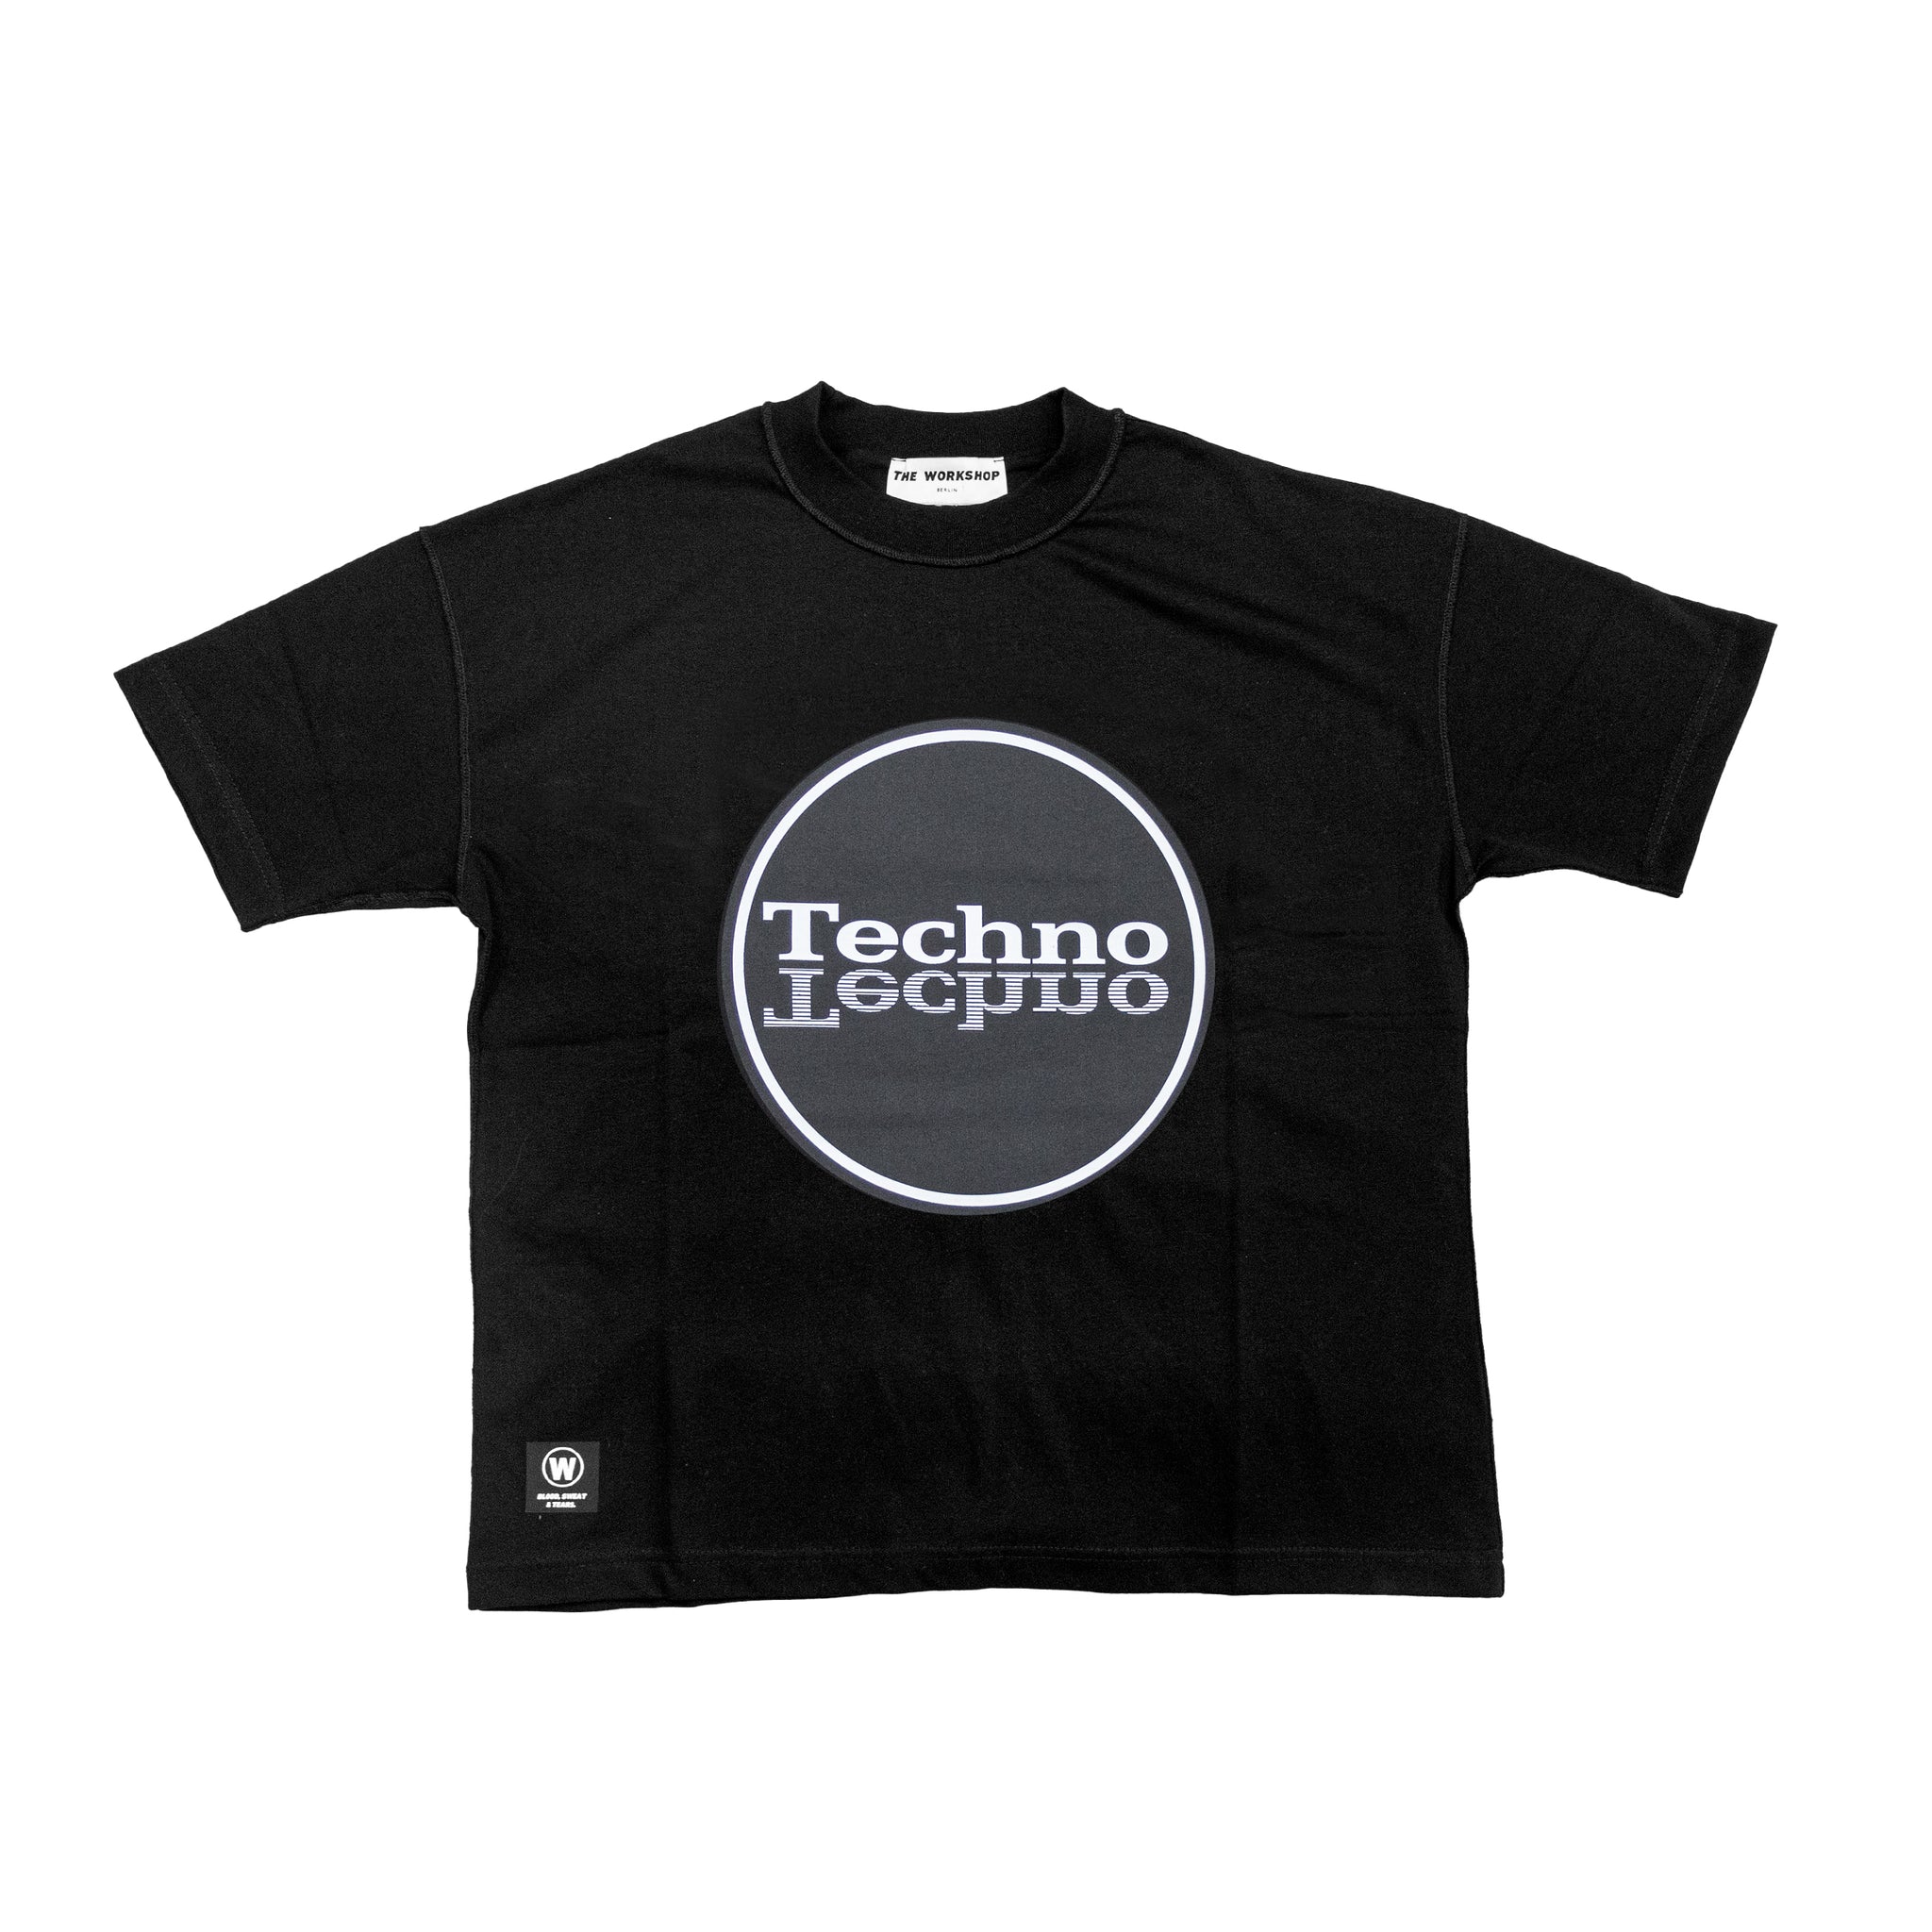 // The Techno Club T-Shirt